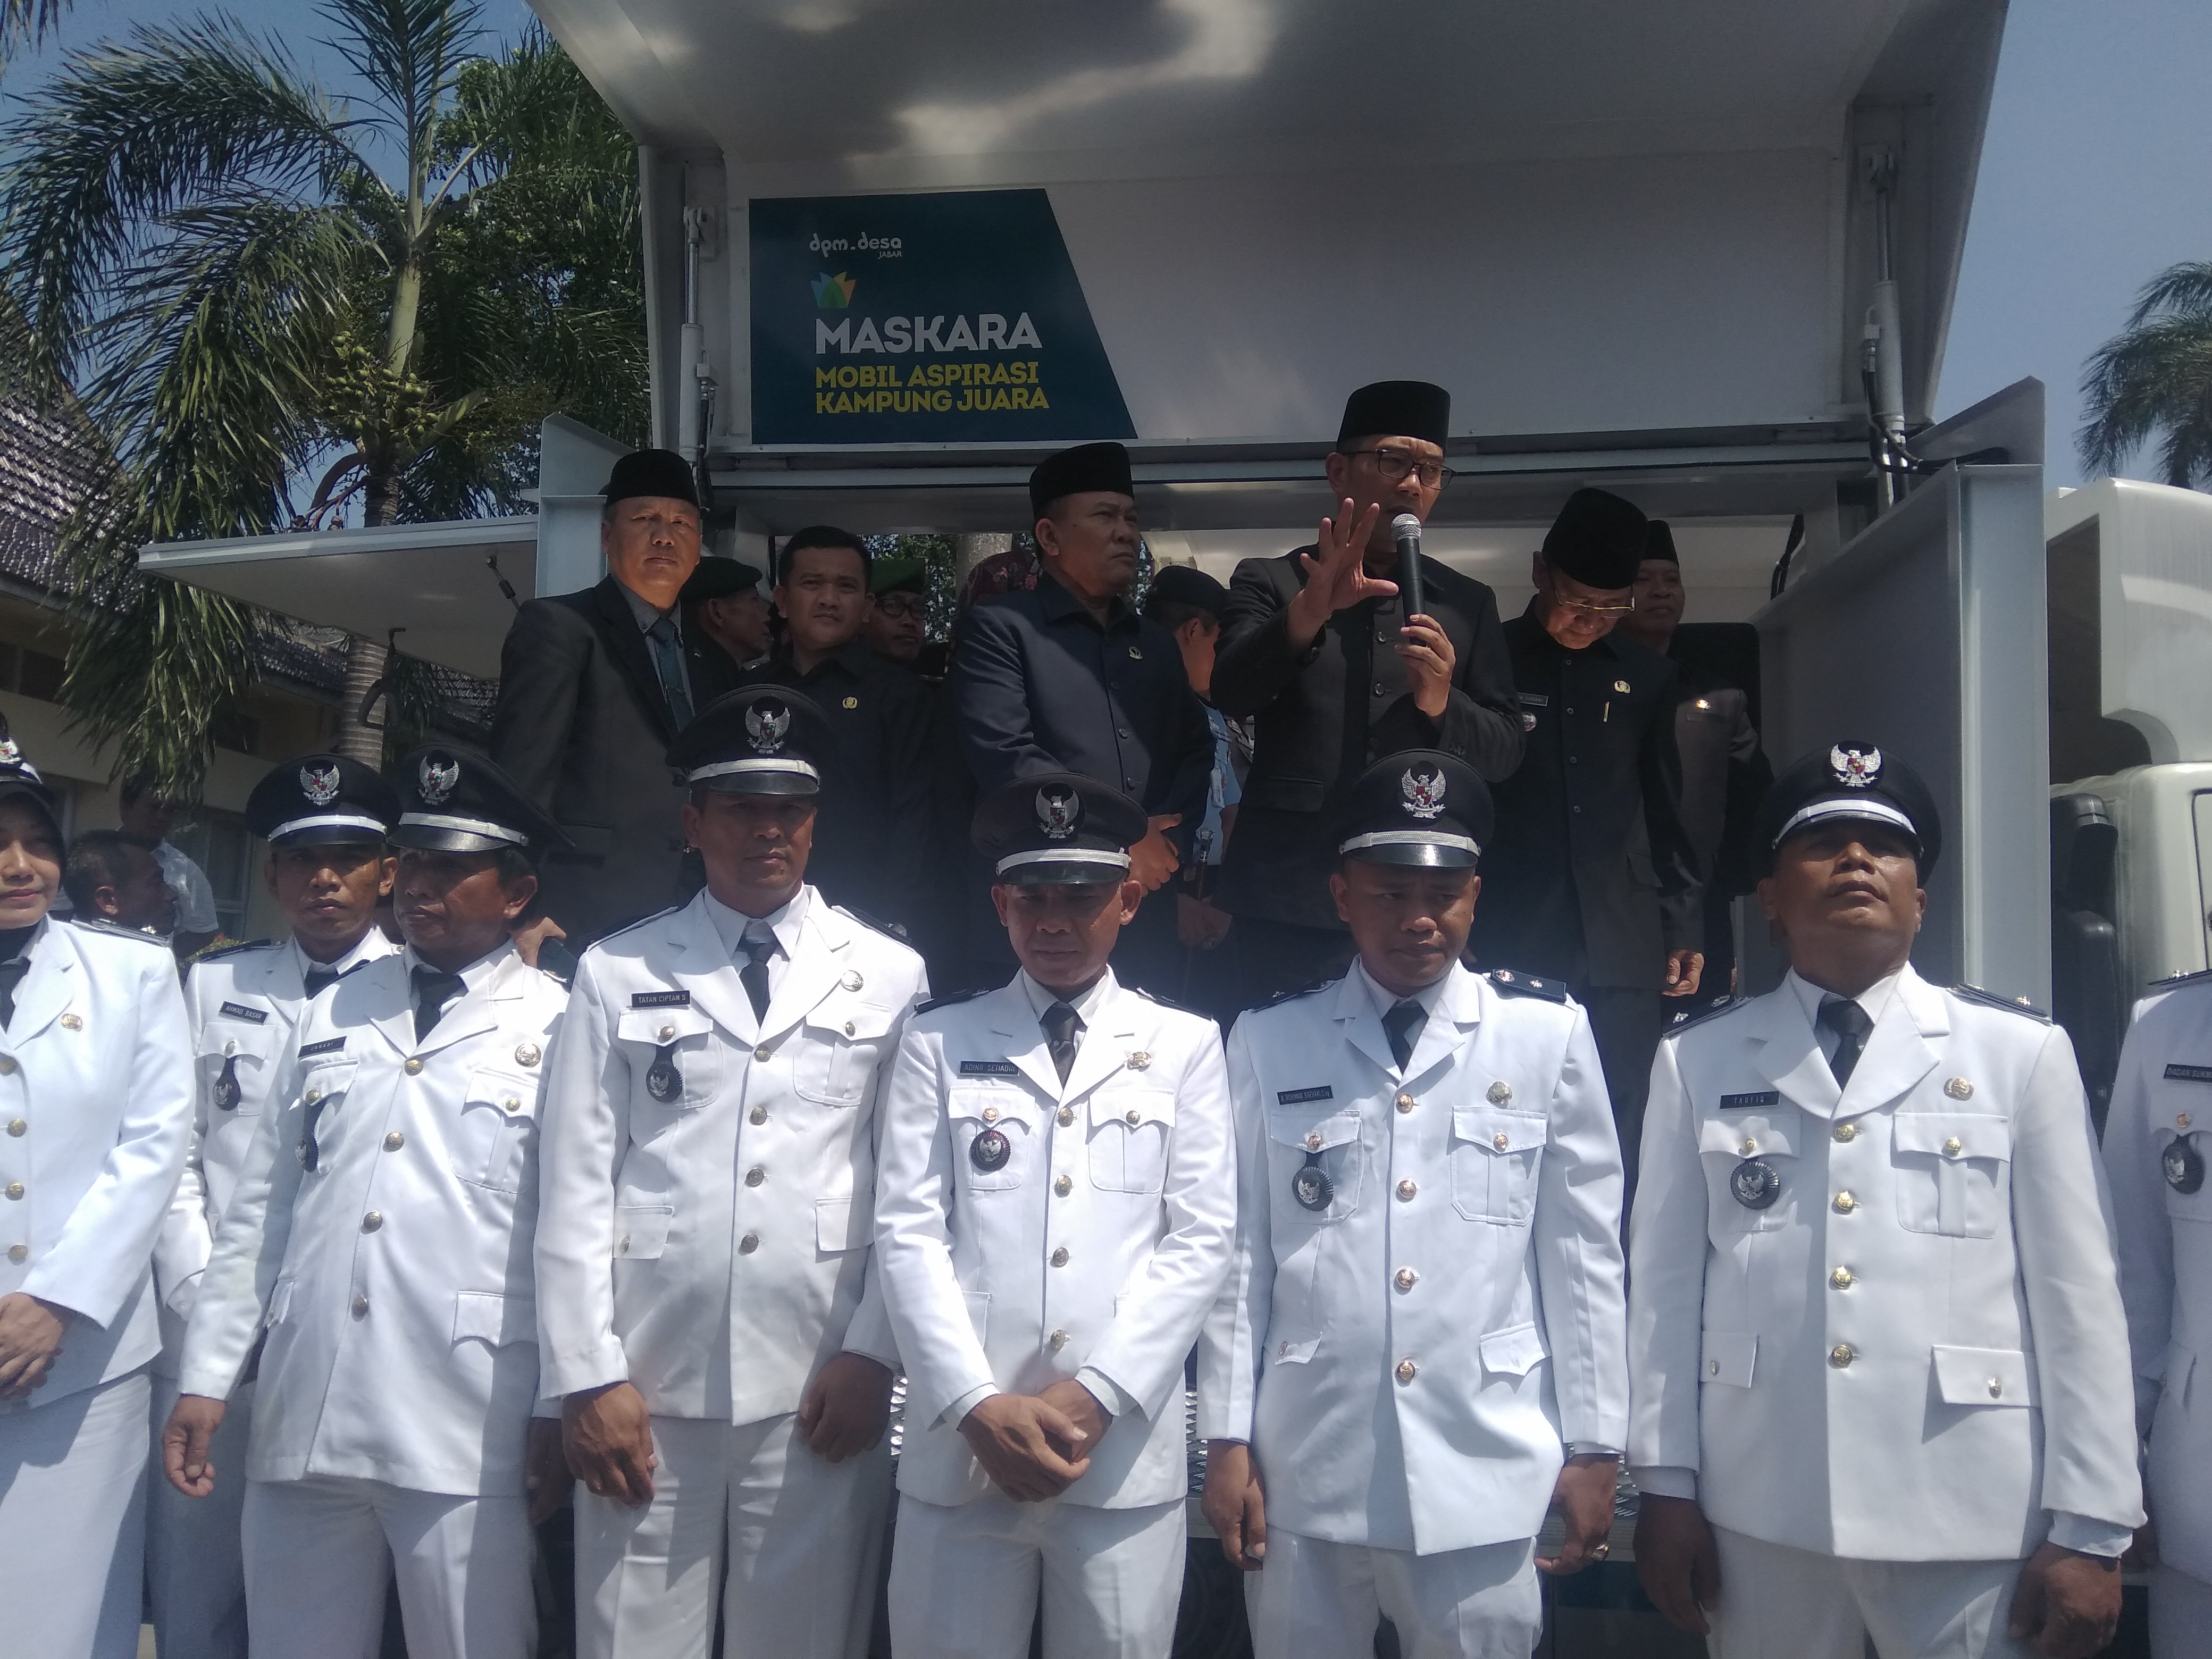 Gubernur Ridwan Kamil  7 Unit Maskara untuk Kepentingan Masyarakat